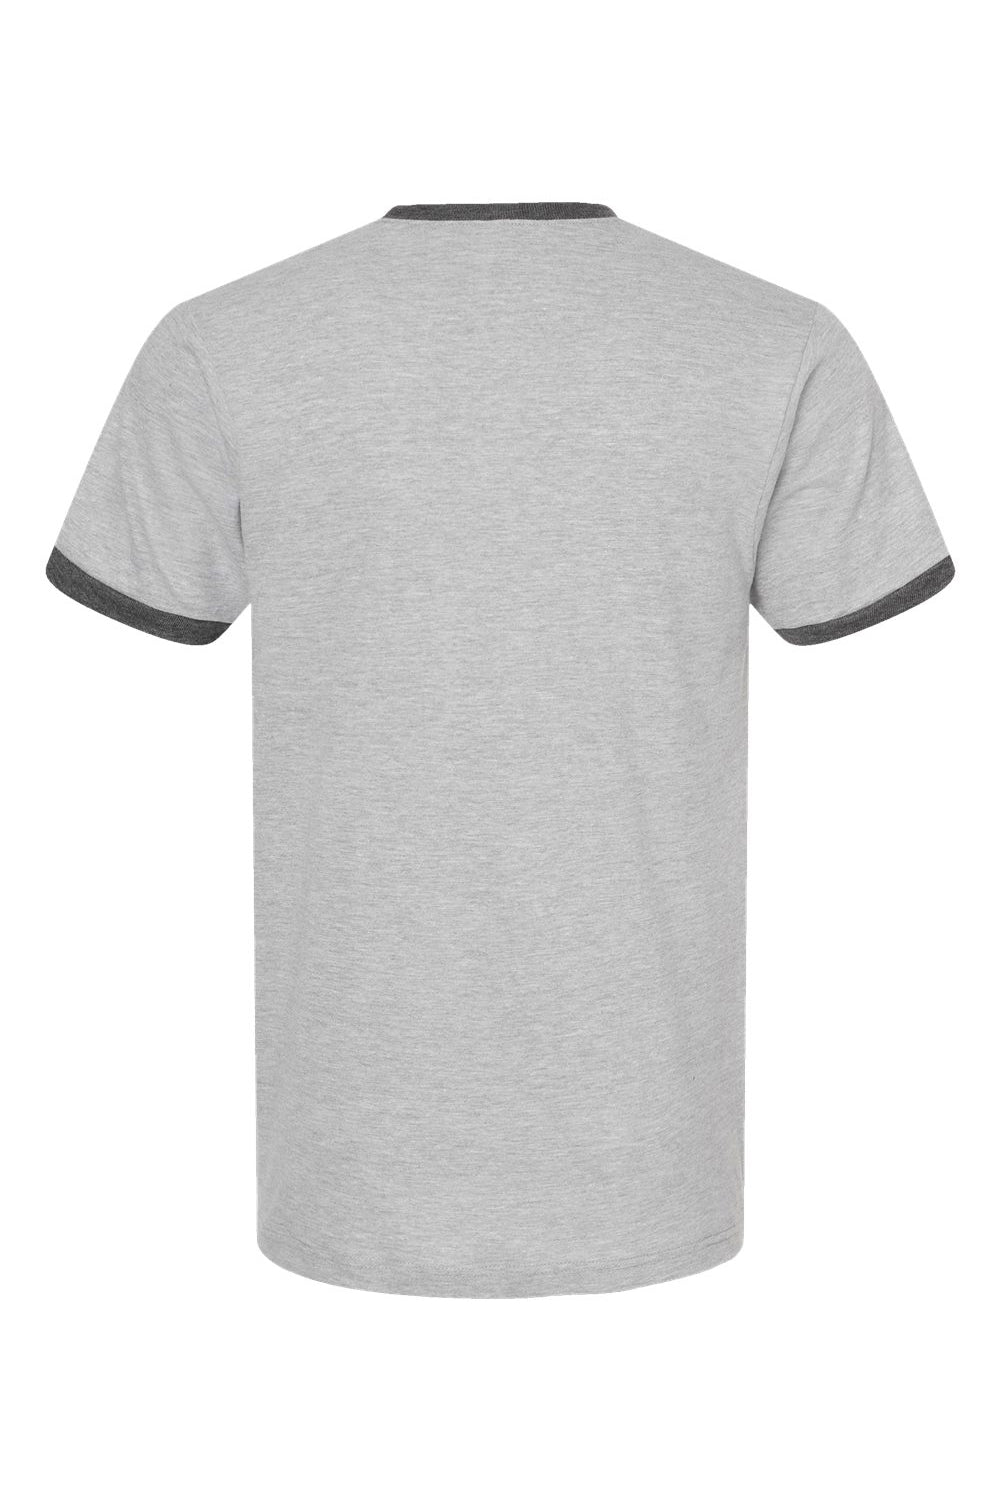 Tultex 246 Mens Fine Jersey Ringer Short Sleeve Crewneck T-Shirt Heather Grey/Heather Charcoal Grey Flat Back